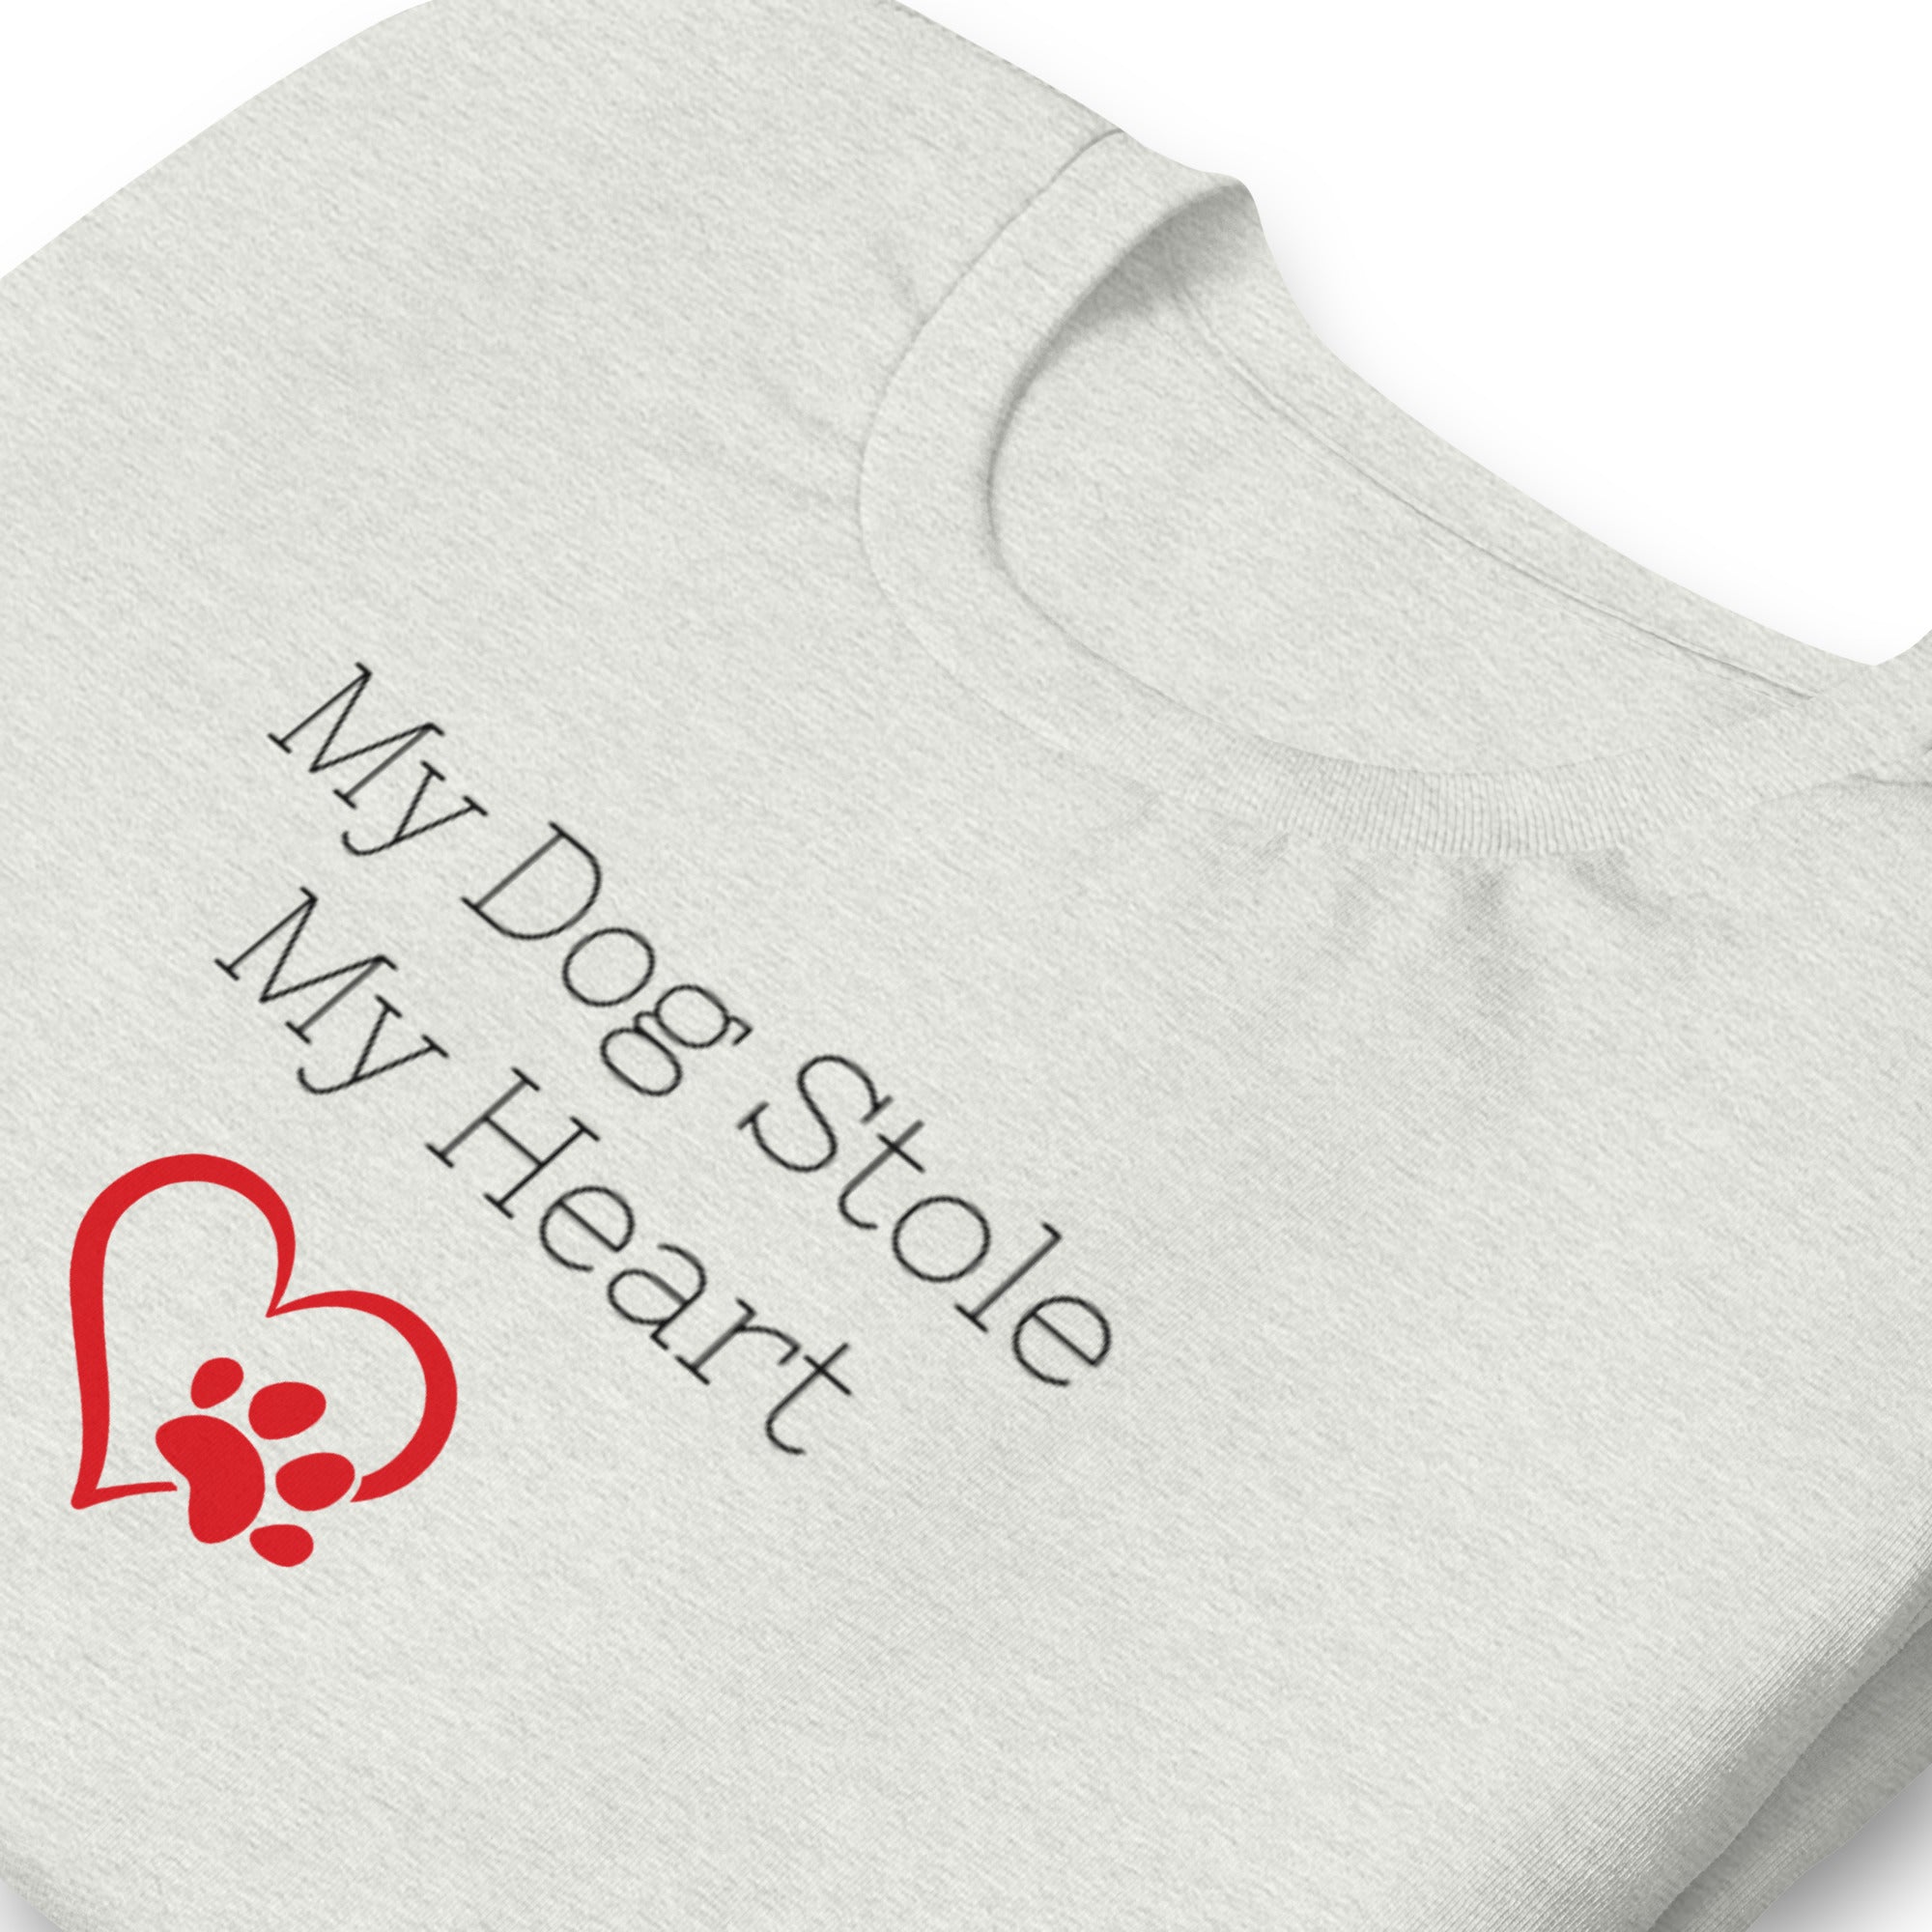 "My Dog Stole My Heart" Unisex T-Shirt